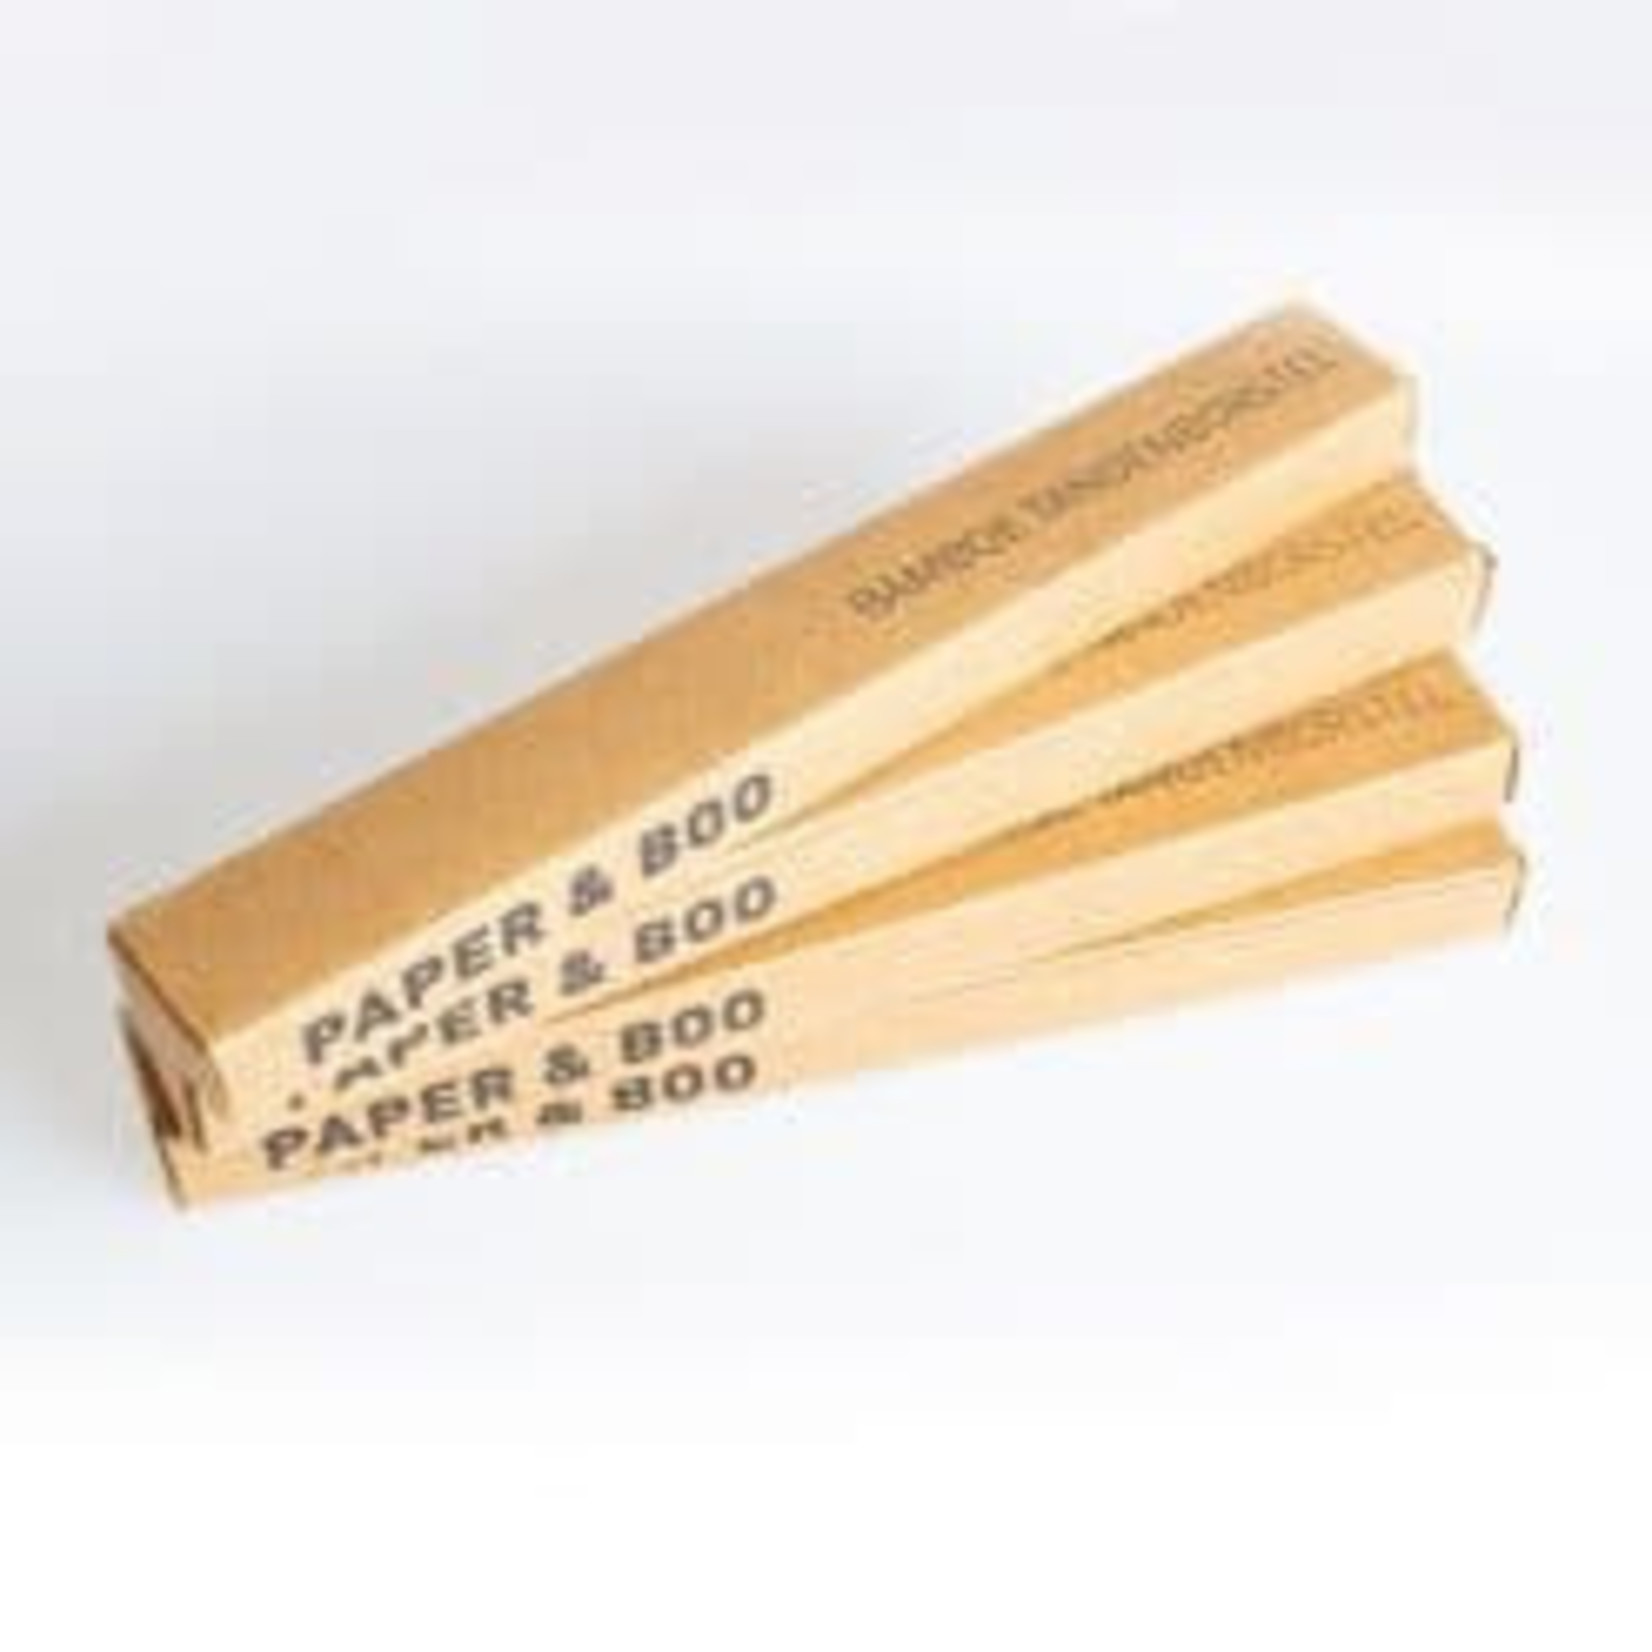 Paper & Boo Paper & Boo - bamboe tandenborstels, set van 4